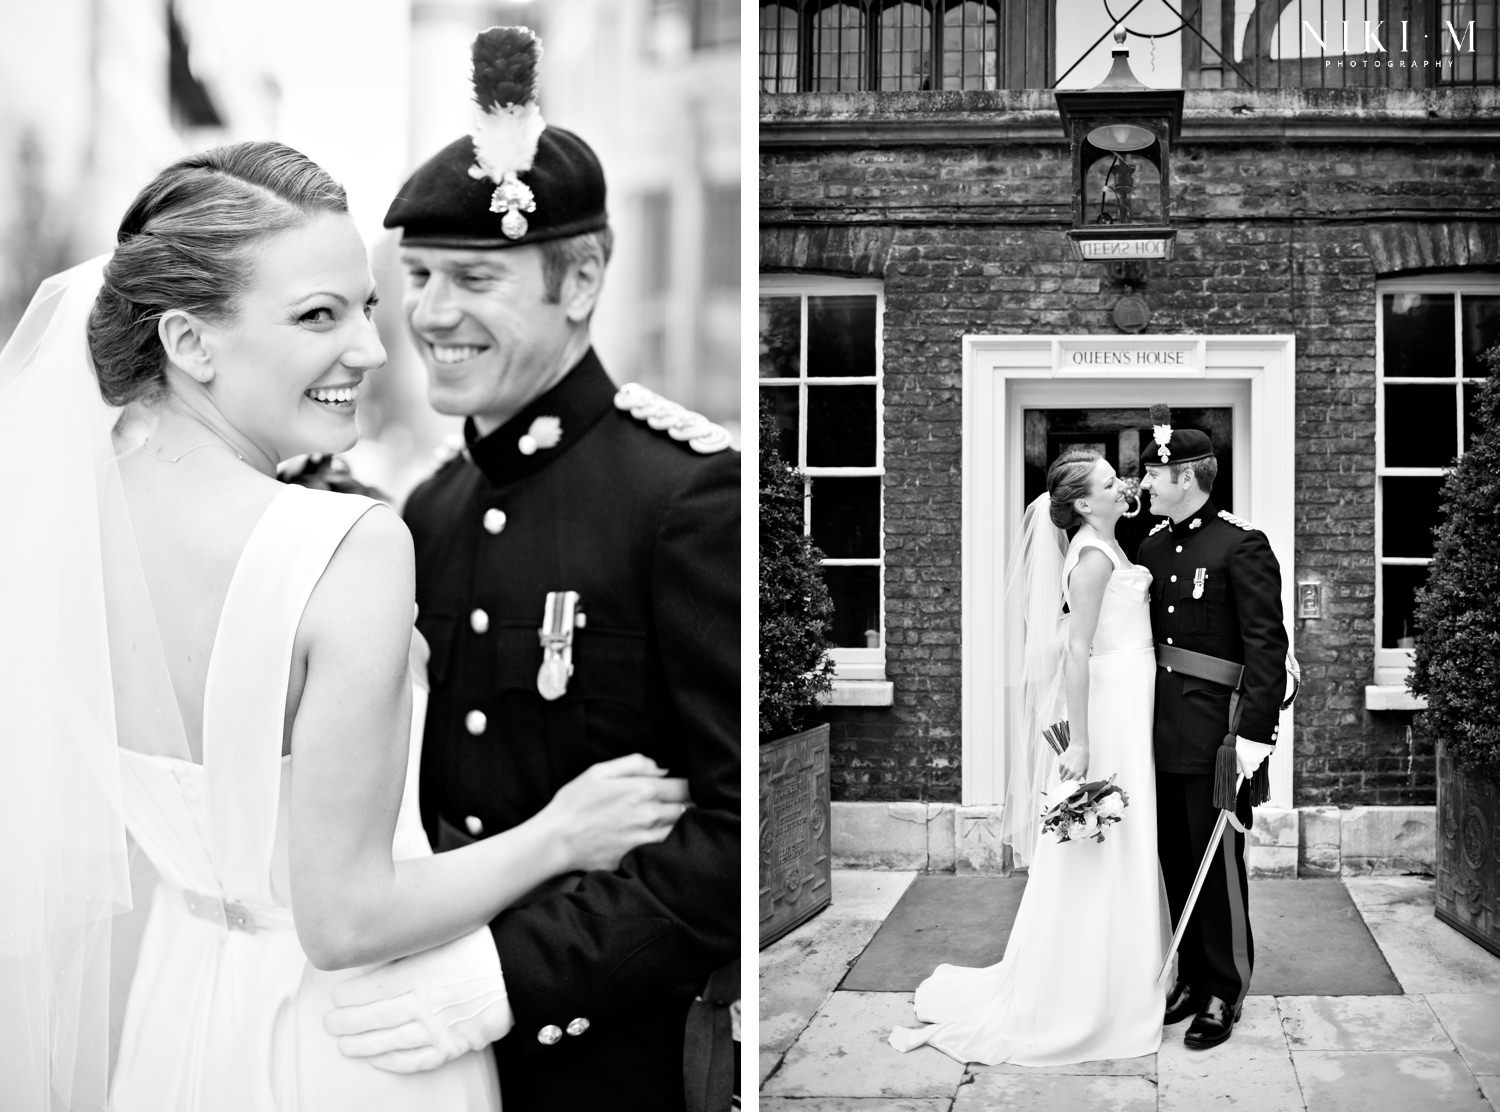 Tower of London wedding couple photos